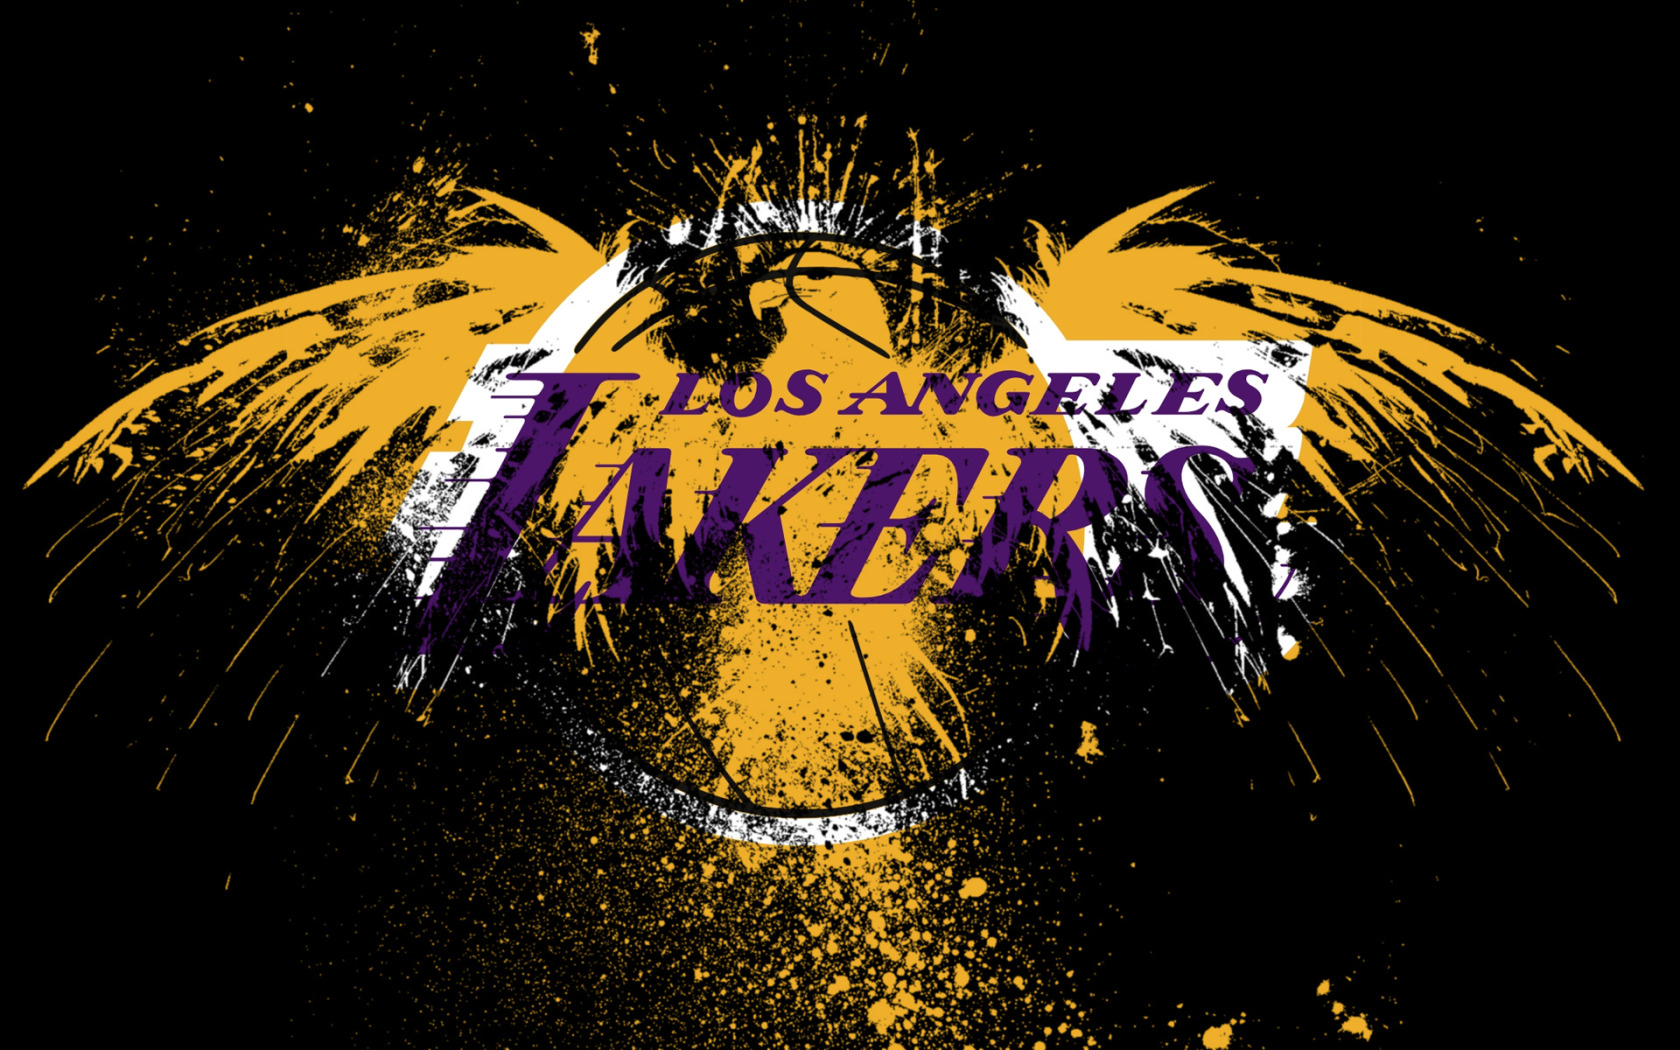 Lakers Wallpaper HD Early